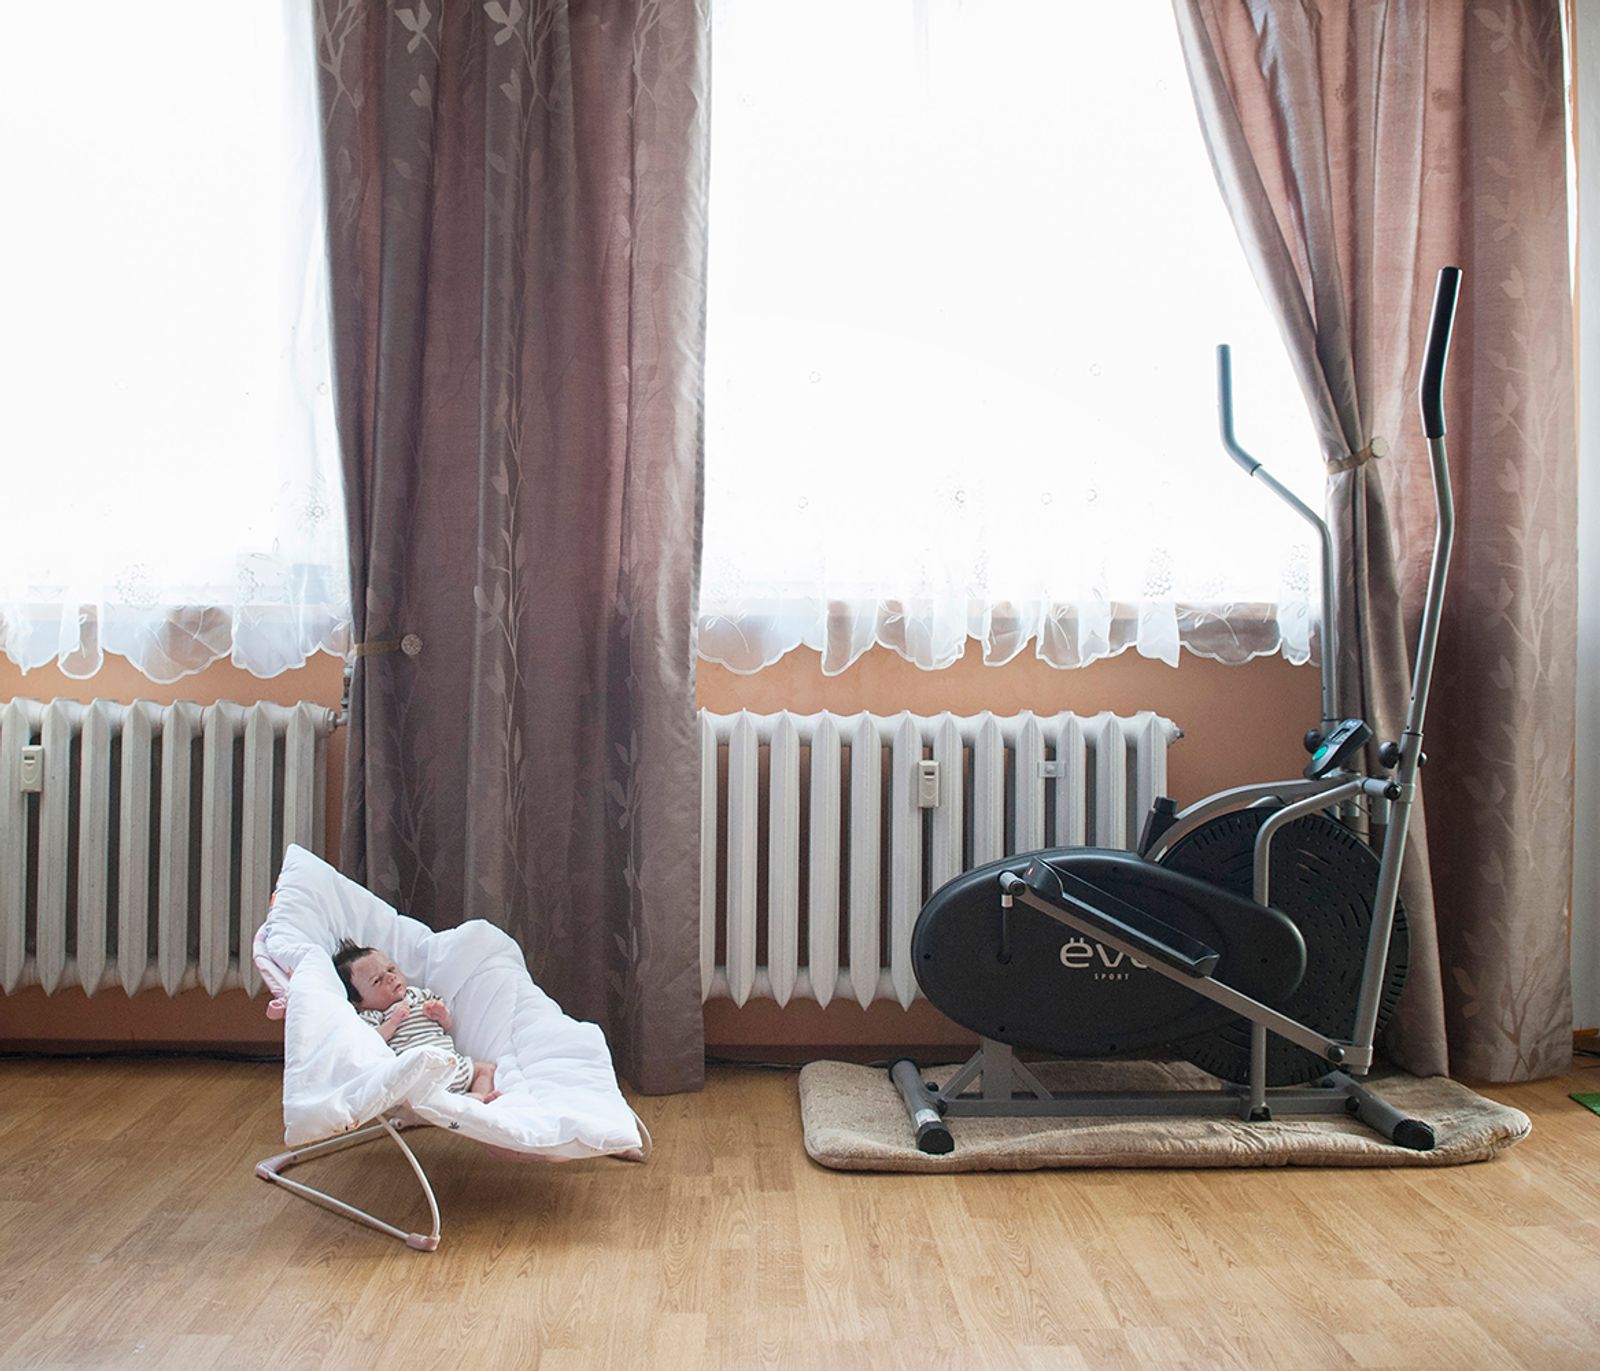 © Karolina Jonderko - When leaving the house "moms" often turn the tv on for the dolls. So they don't feel alone.